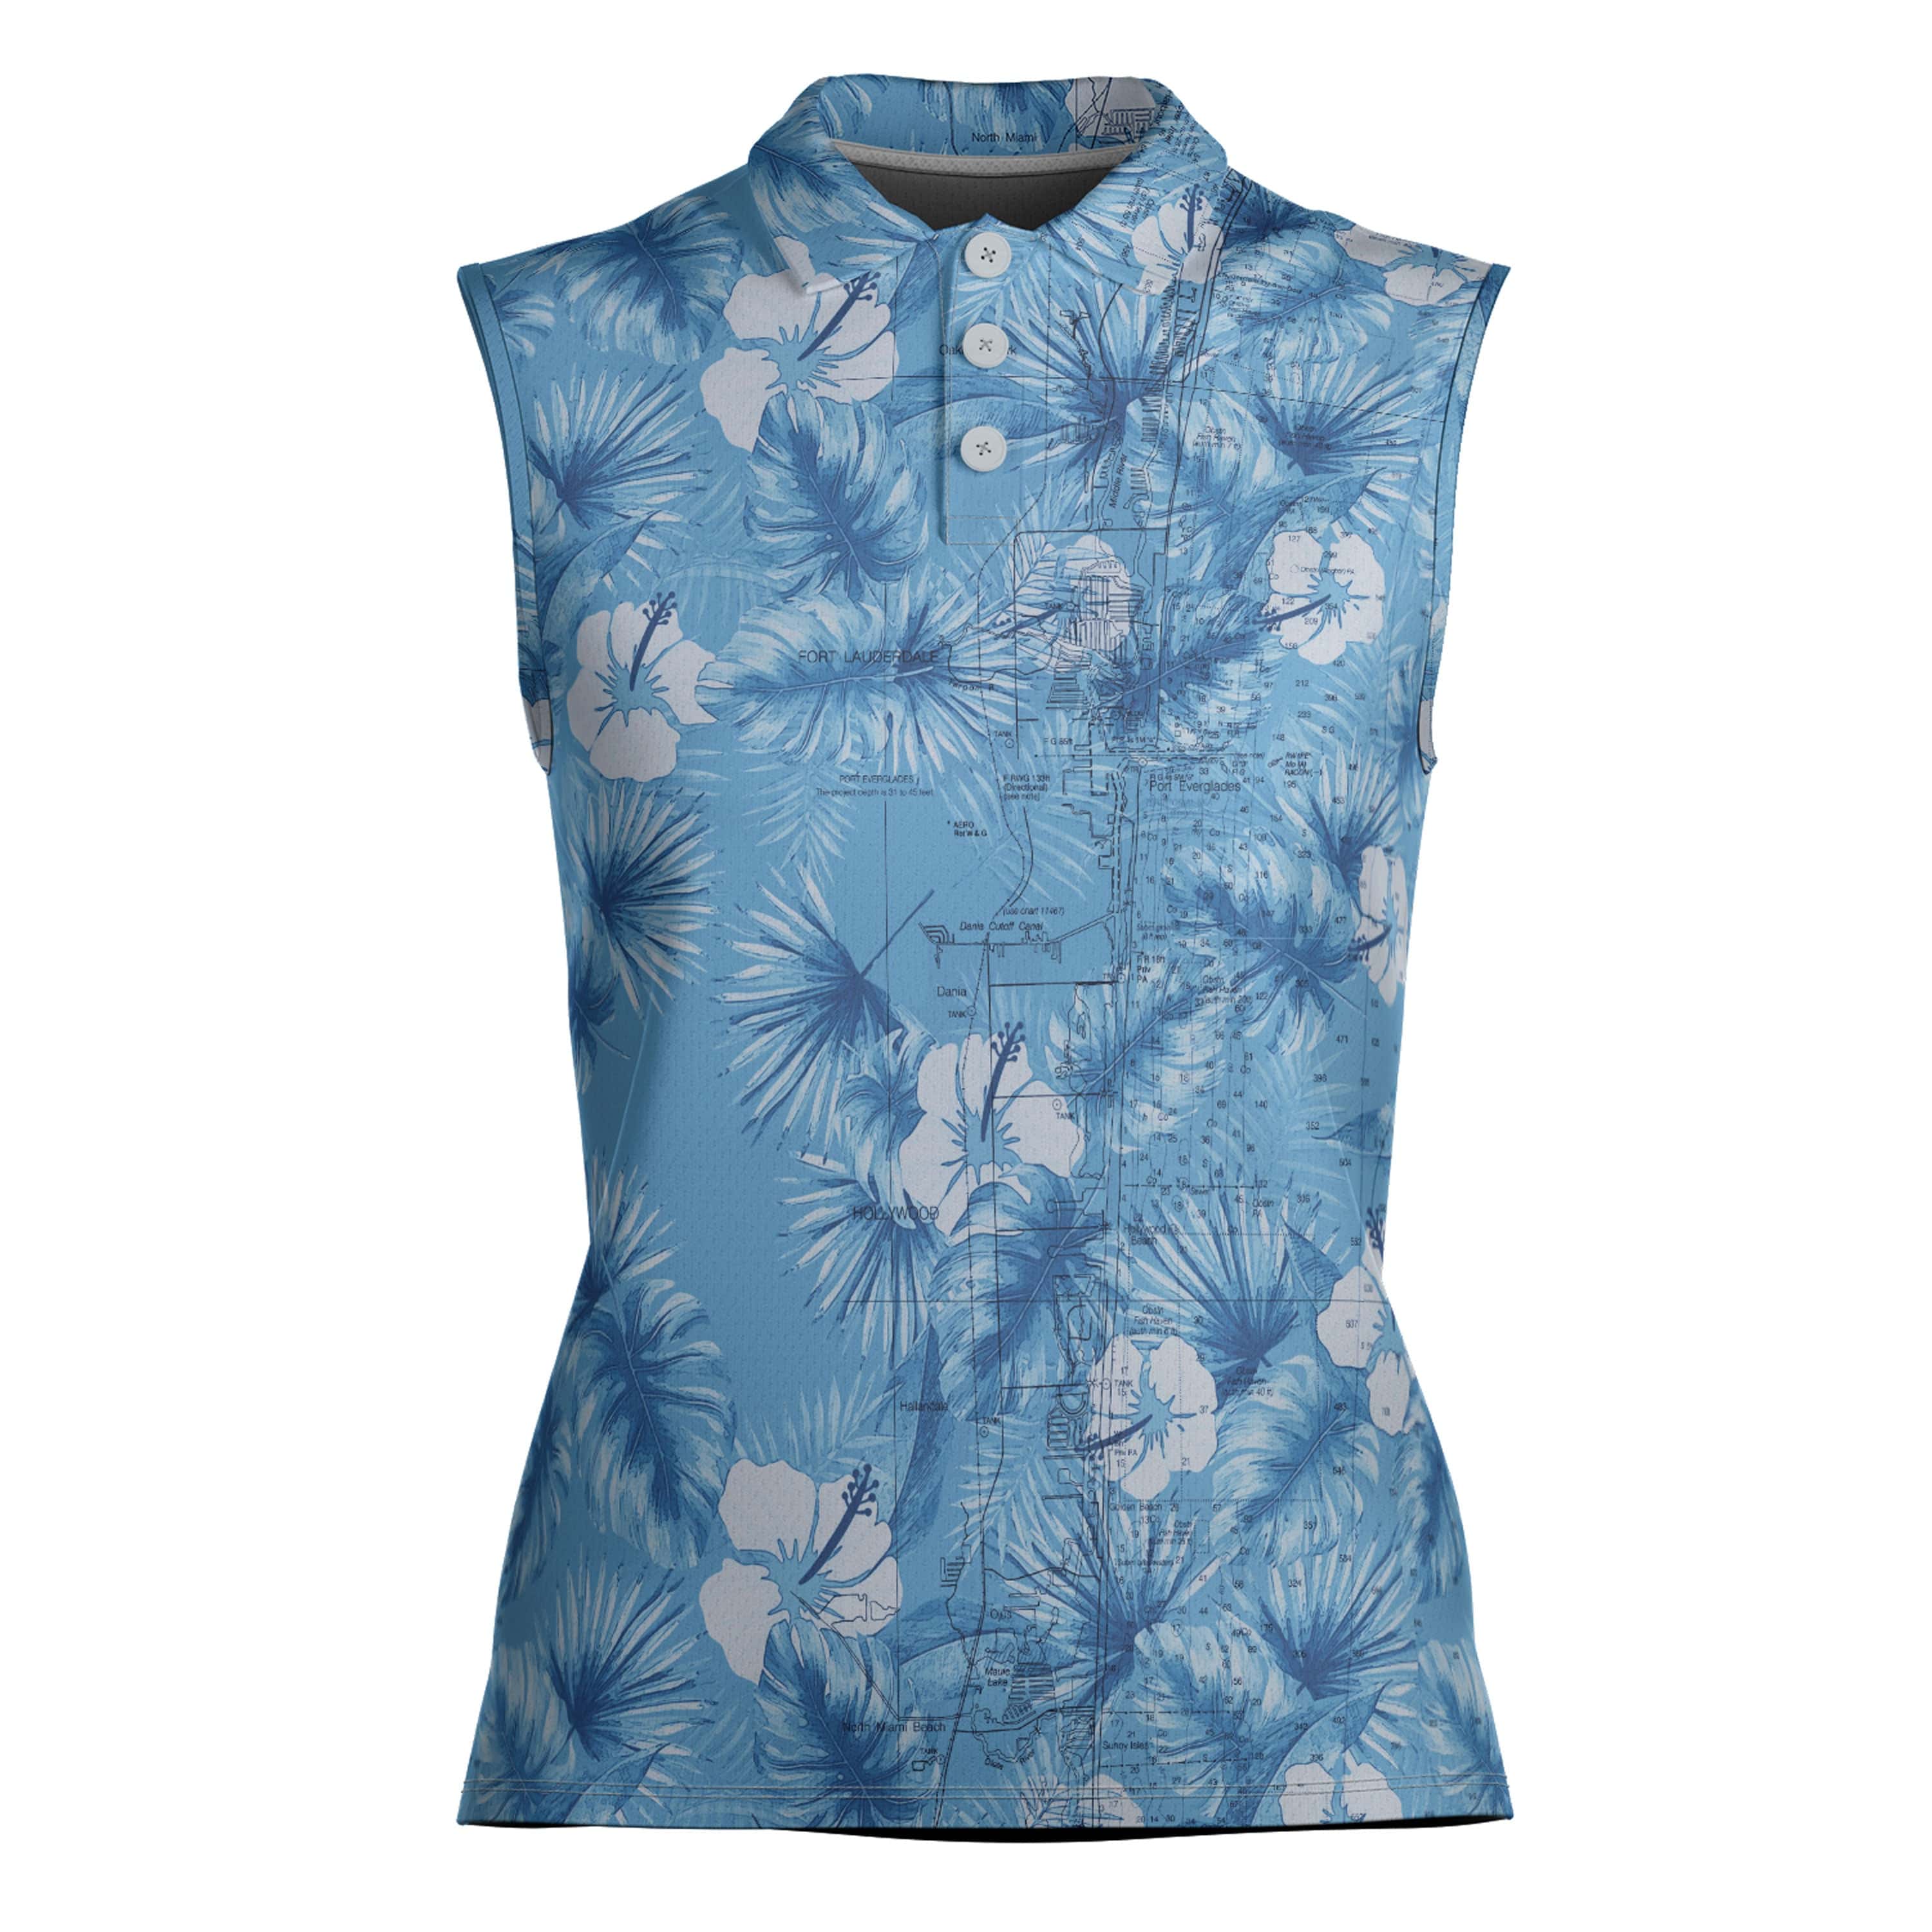 The Ft Lauderdale Blue Tropical Women's Sleeveless Polo Shirt